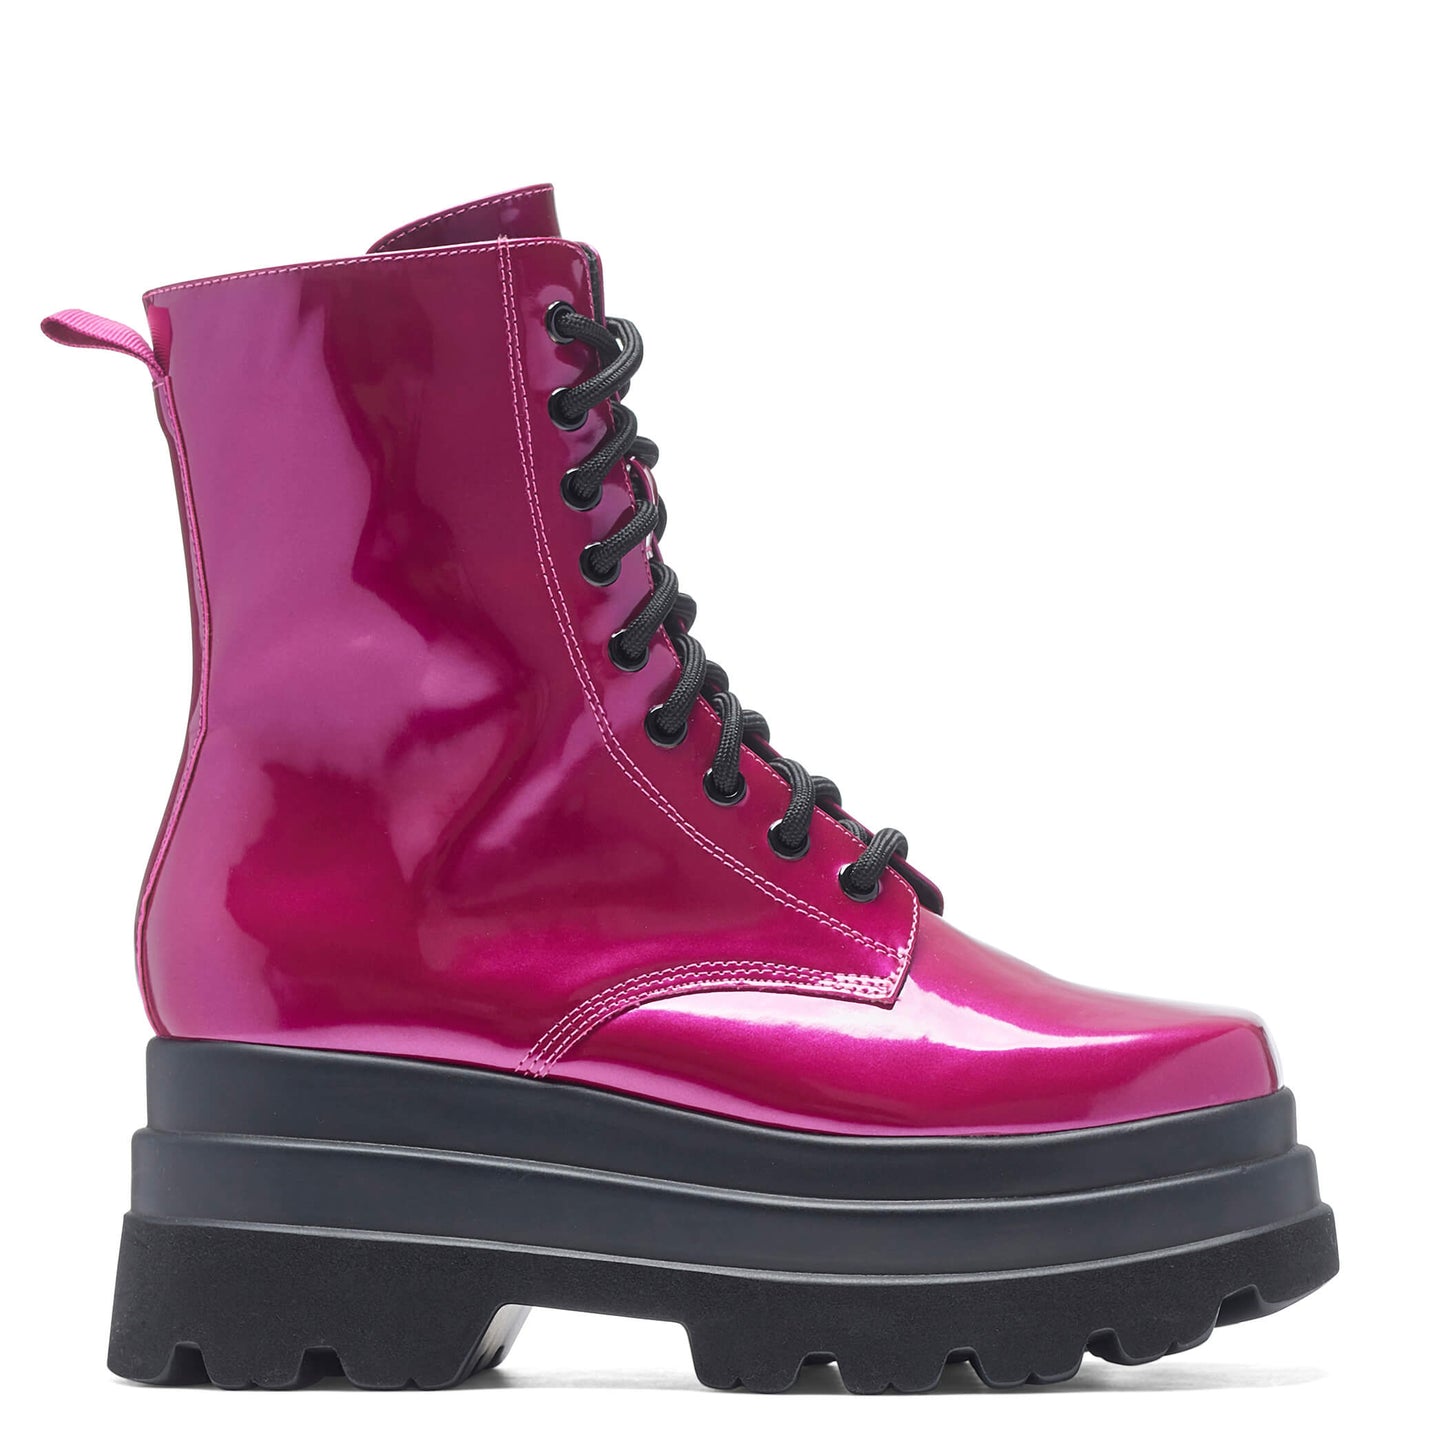 Deathwatch Trident Platform Boots - Candy Pink - KOI Footwear - Side View